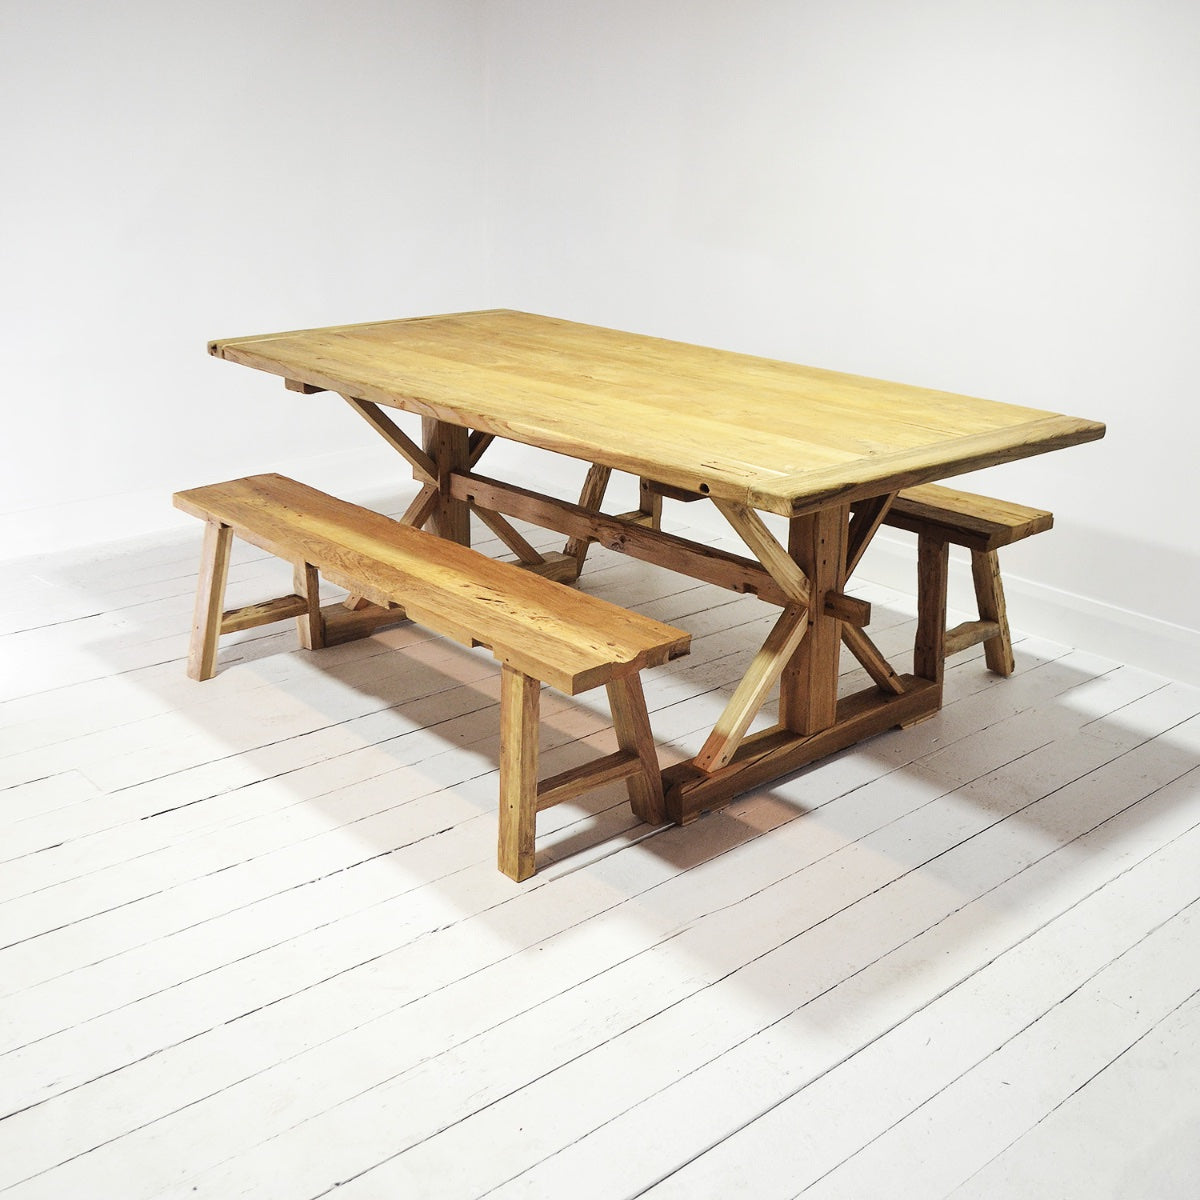 Teak Timber Cross Leg Dining Table 2.5m x 1m